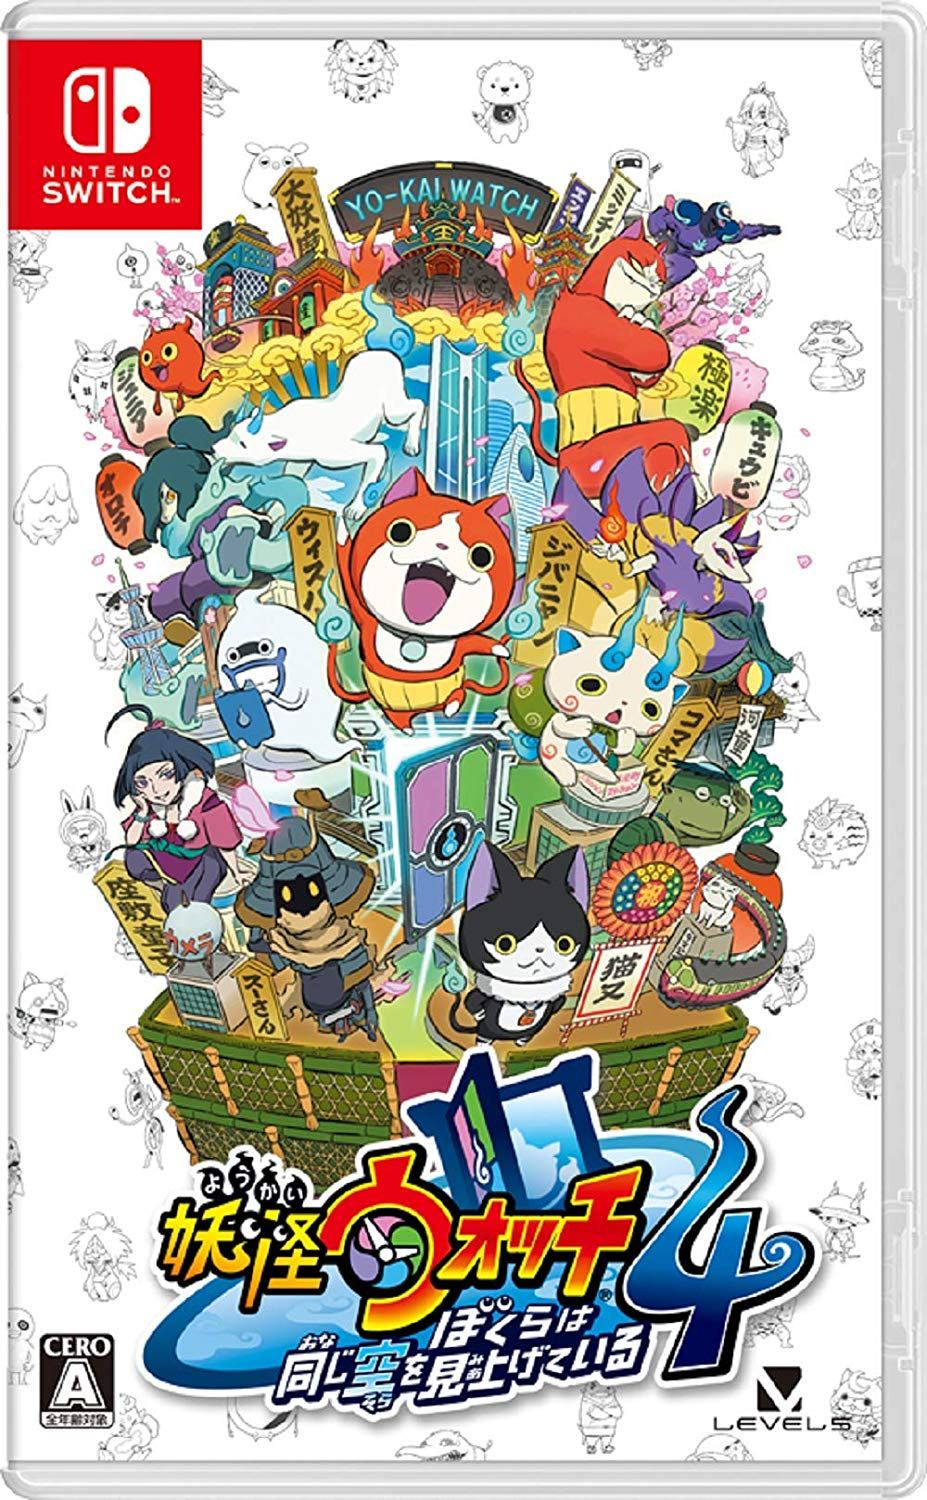 Level-5 details the upcoming Yo-Kai Watch! anime series, and Yo